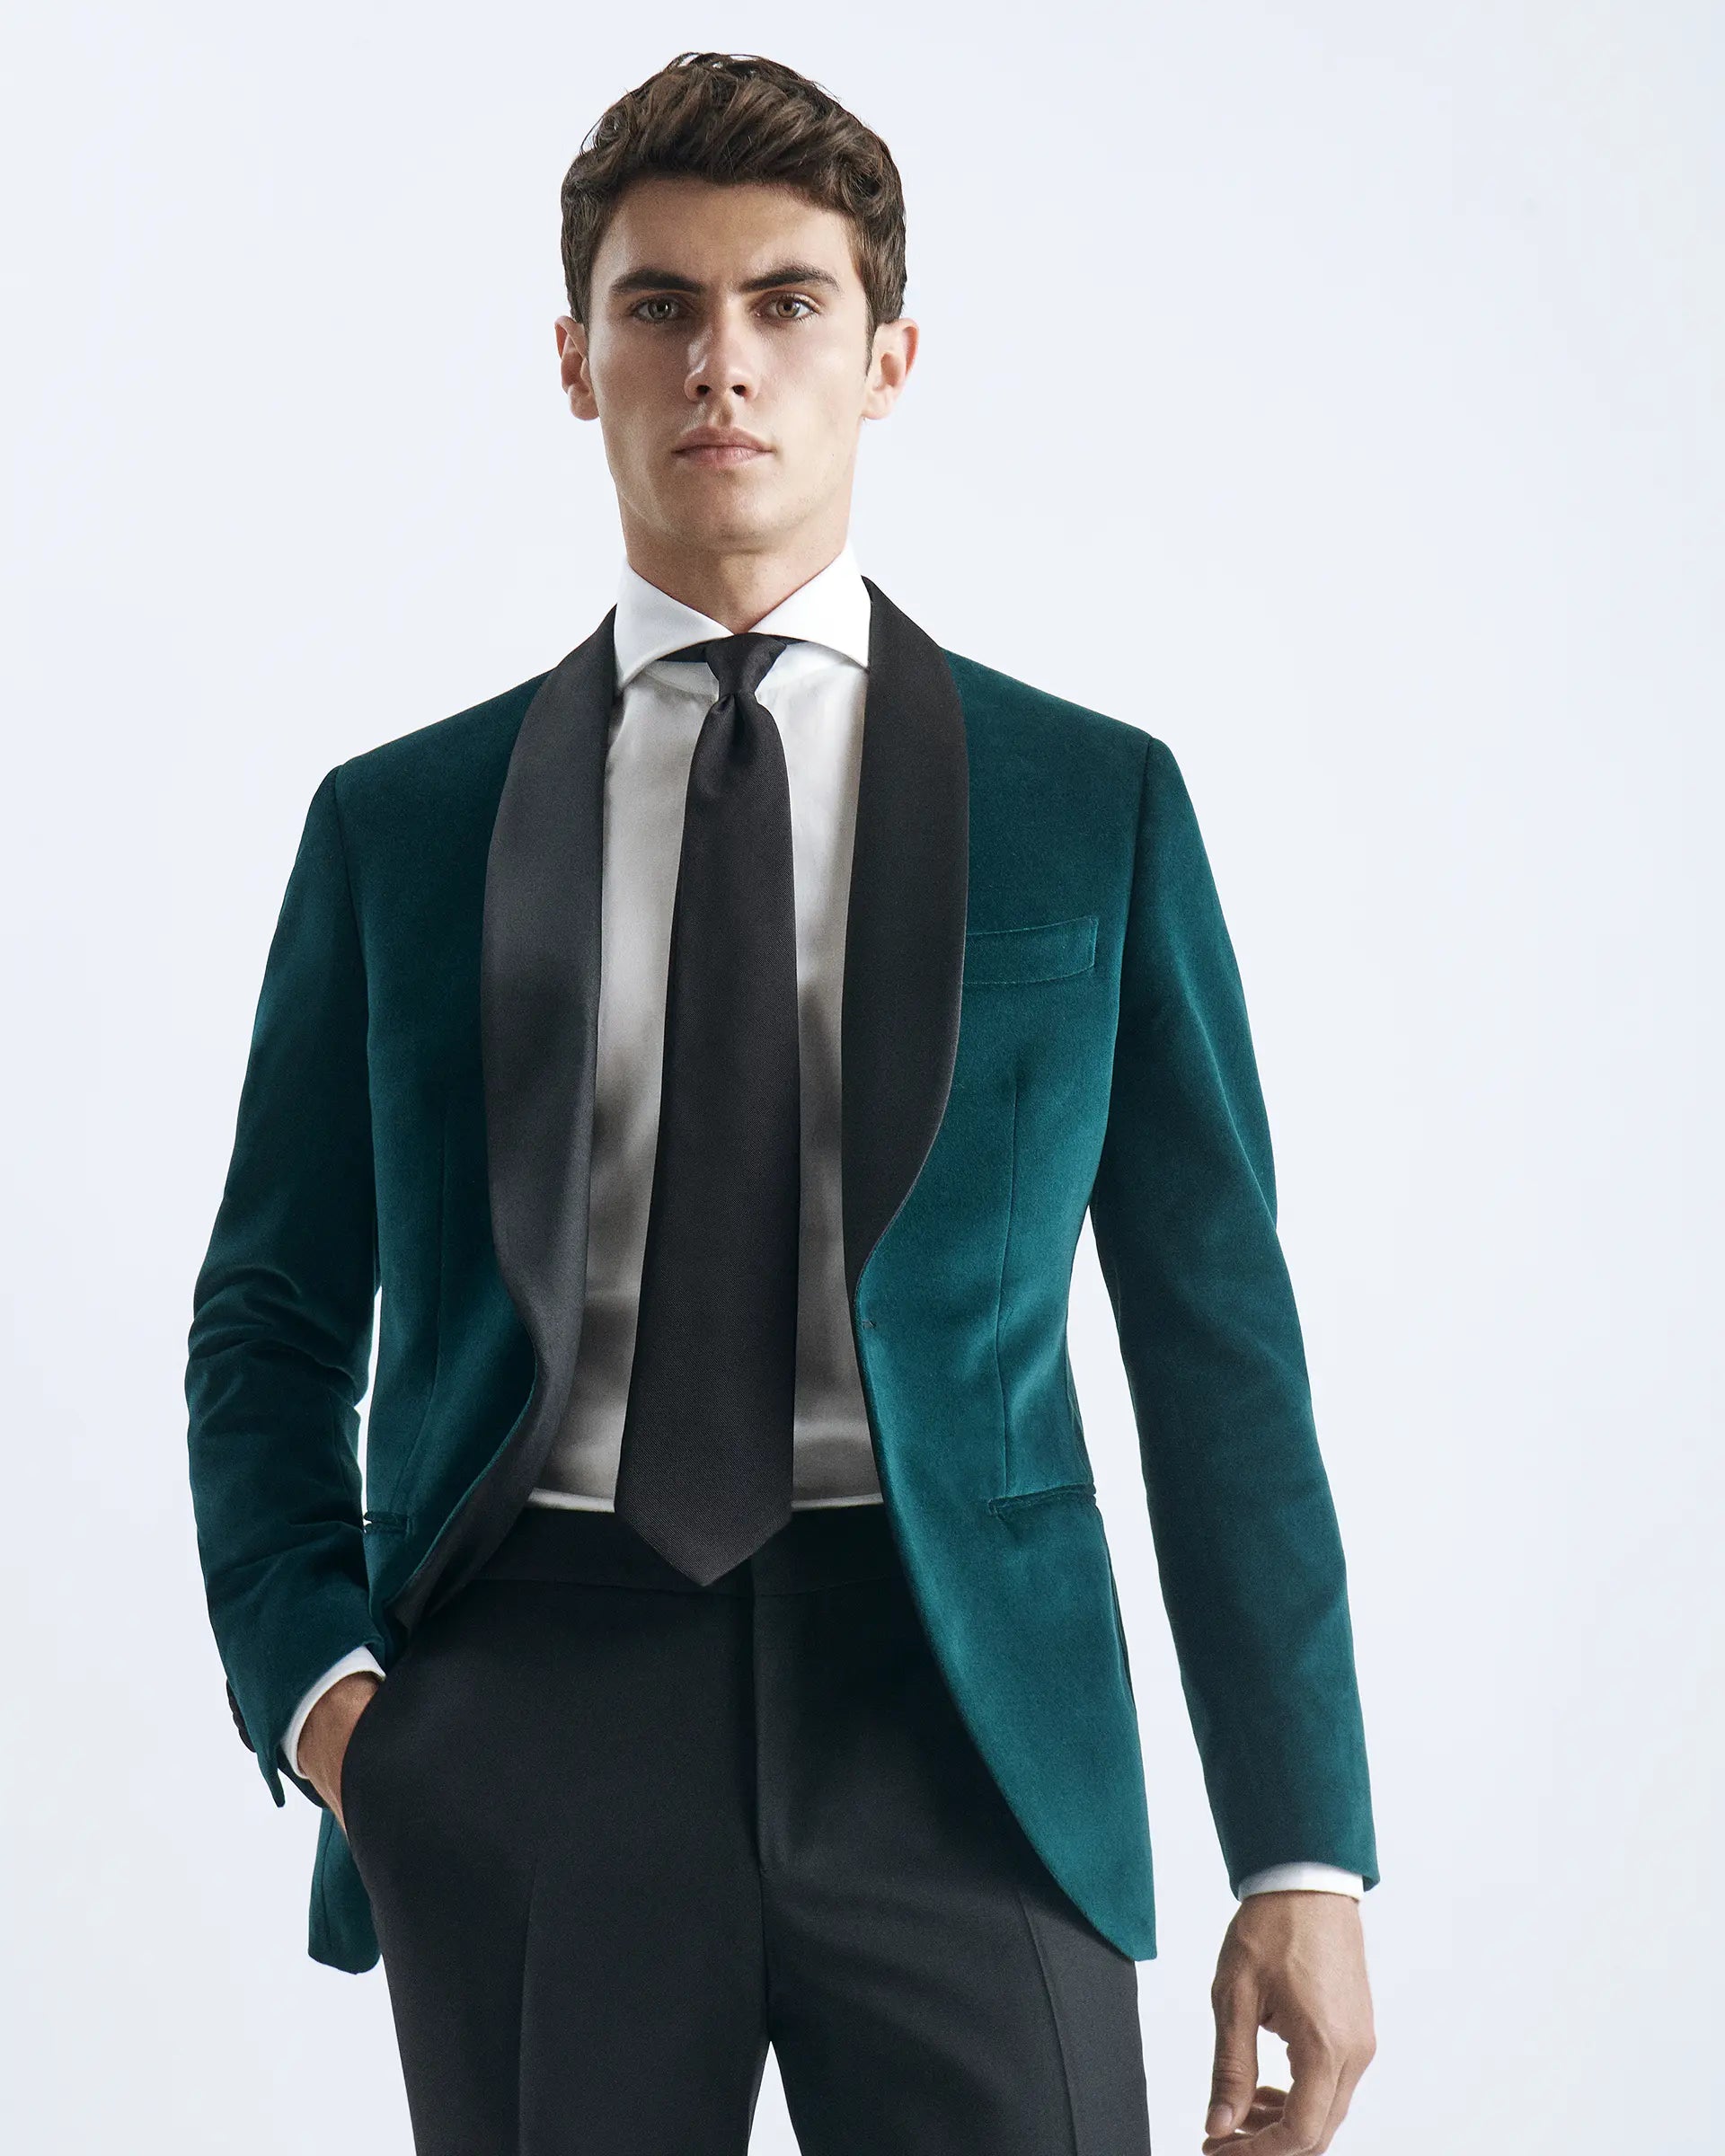 Green tuxedo jacket in smooth cotton velvet